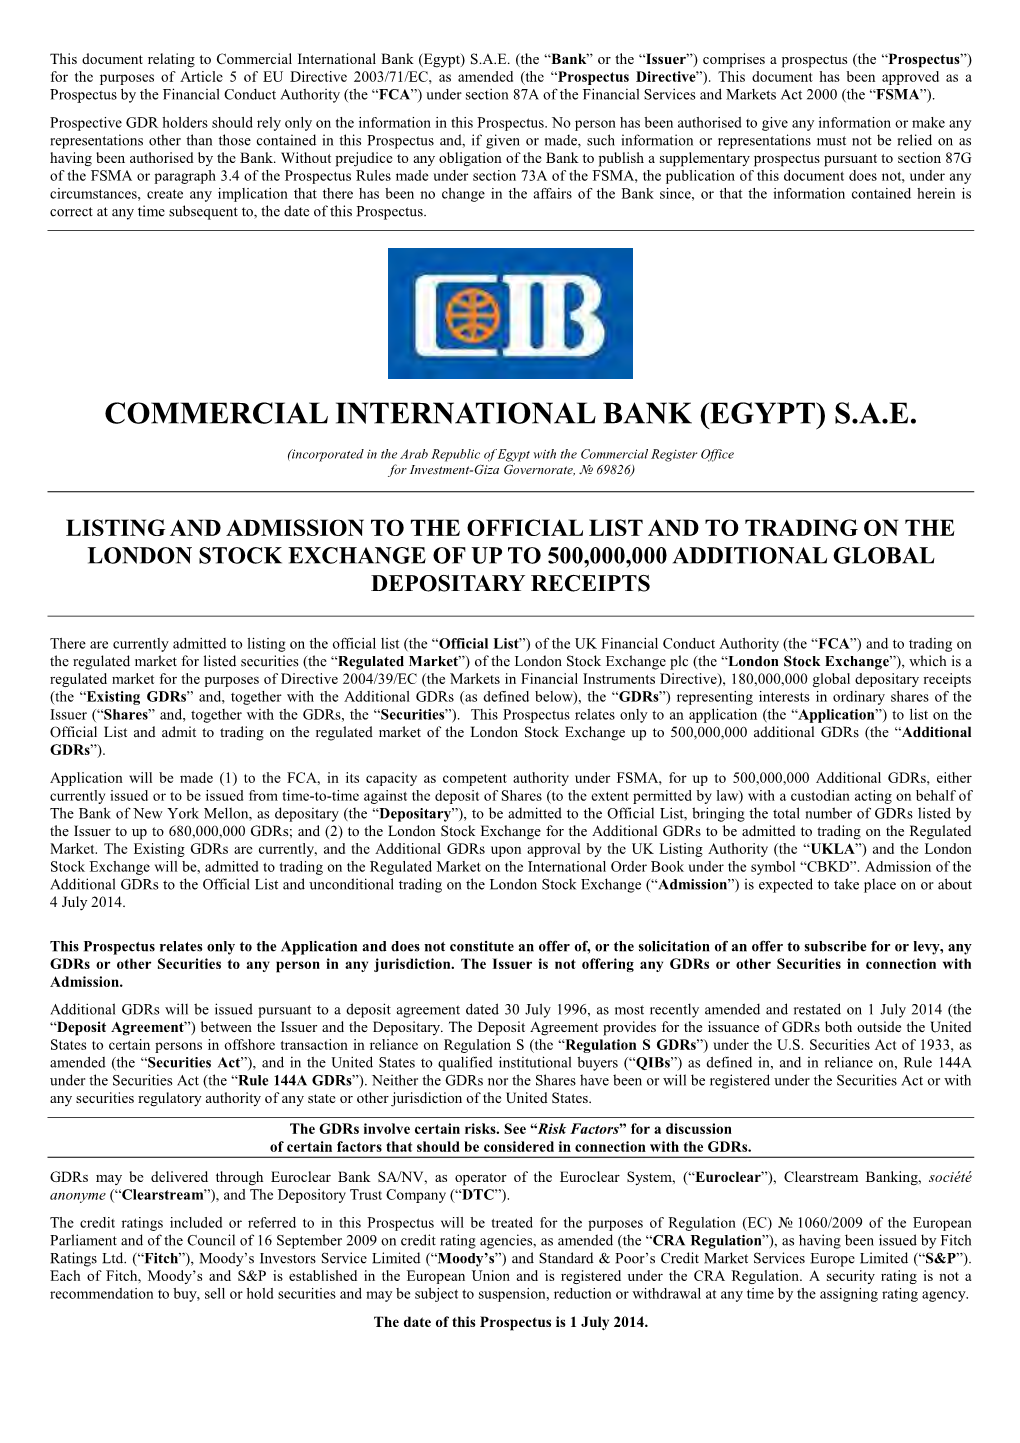 Commercial International Bank (Egypt) S.A.E